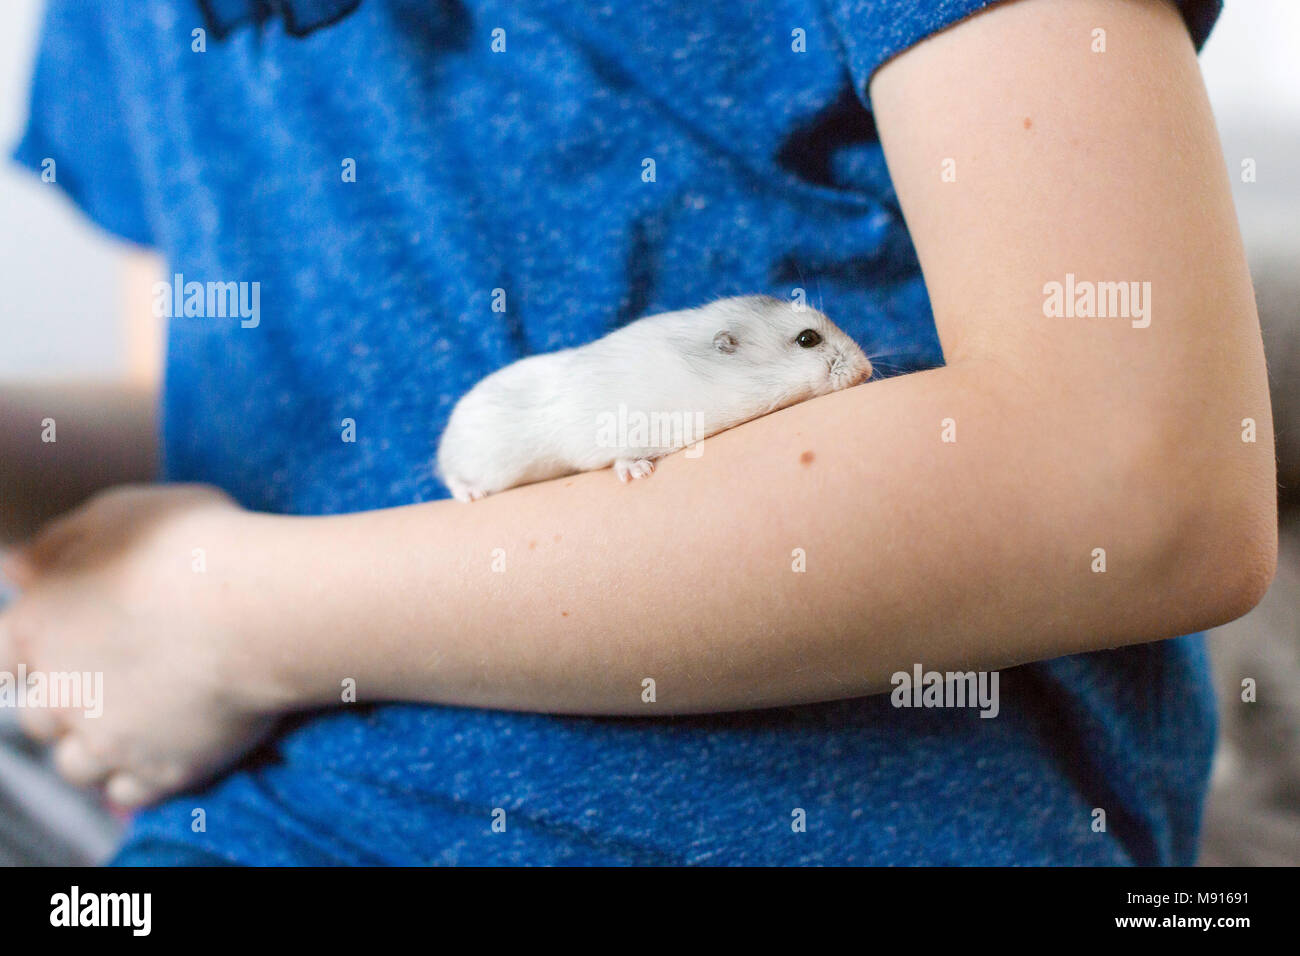 Djungarian hamster climbing child's arm Stock Photo